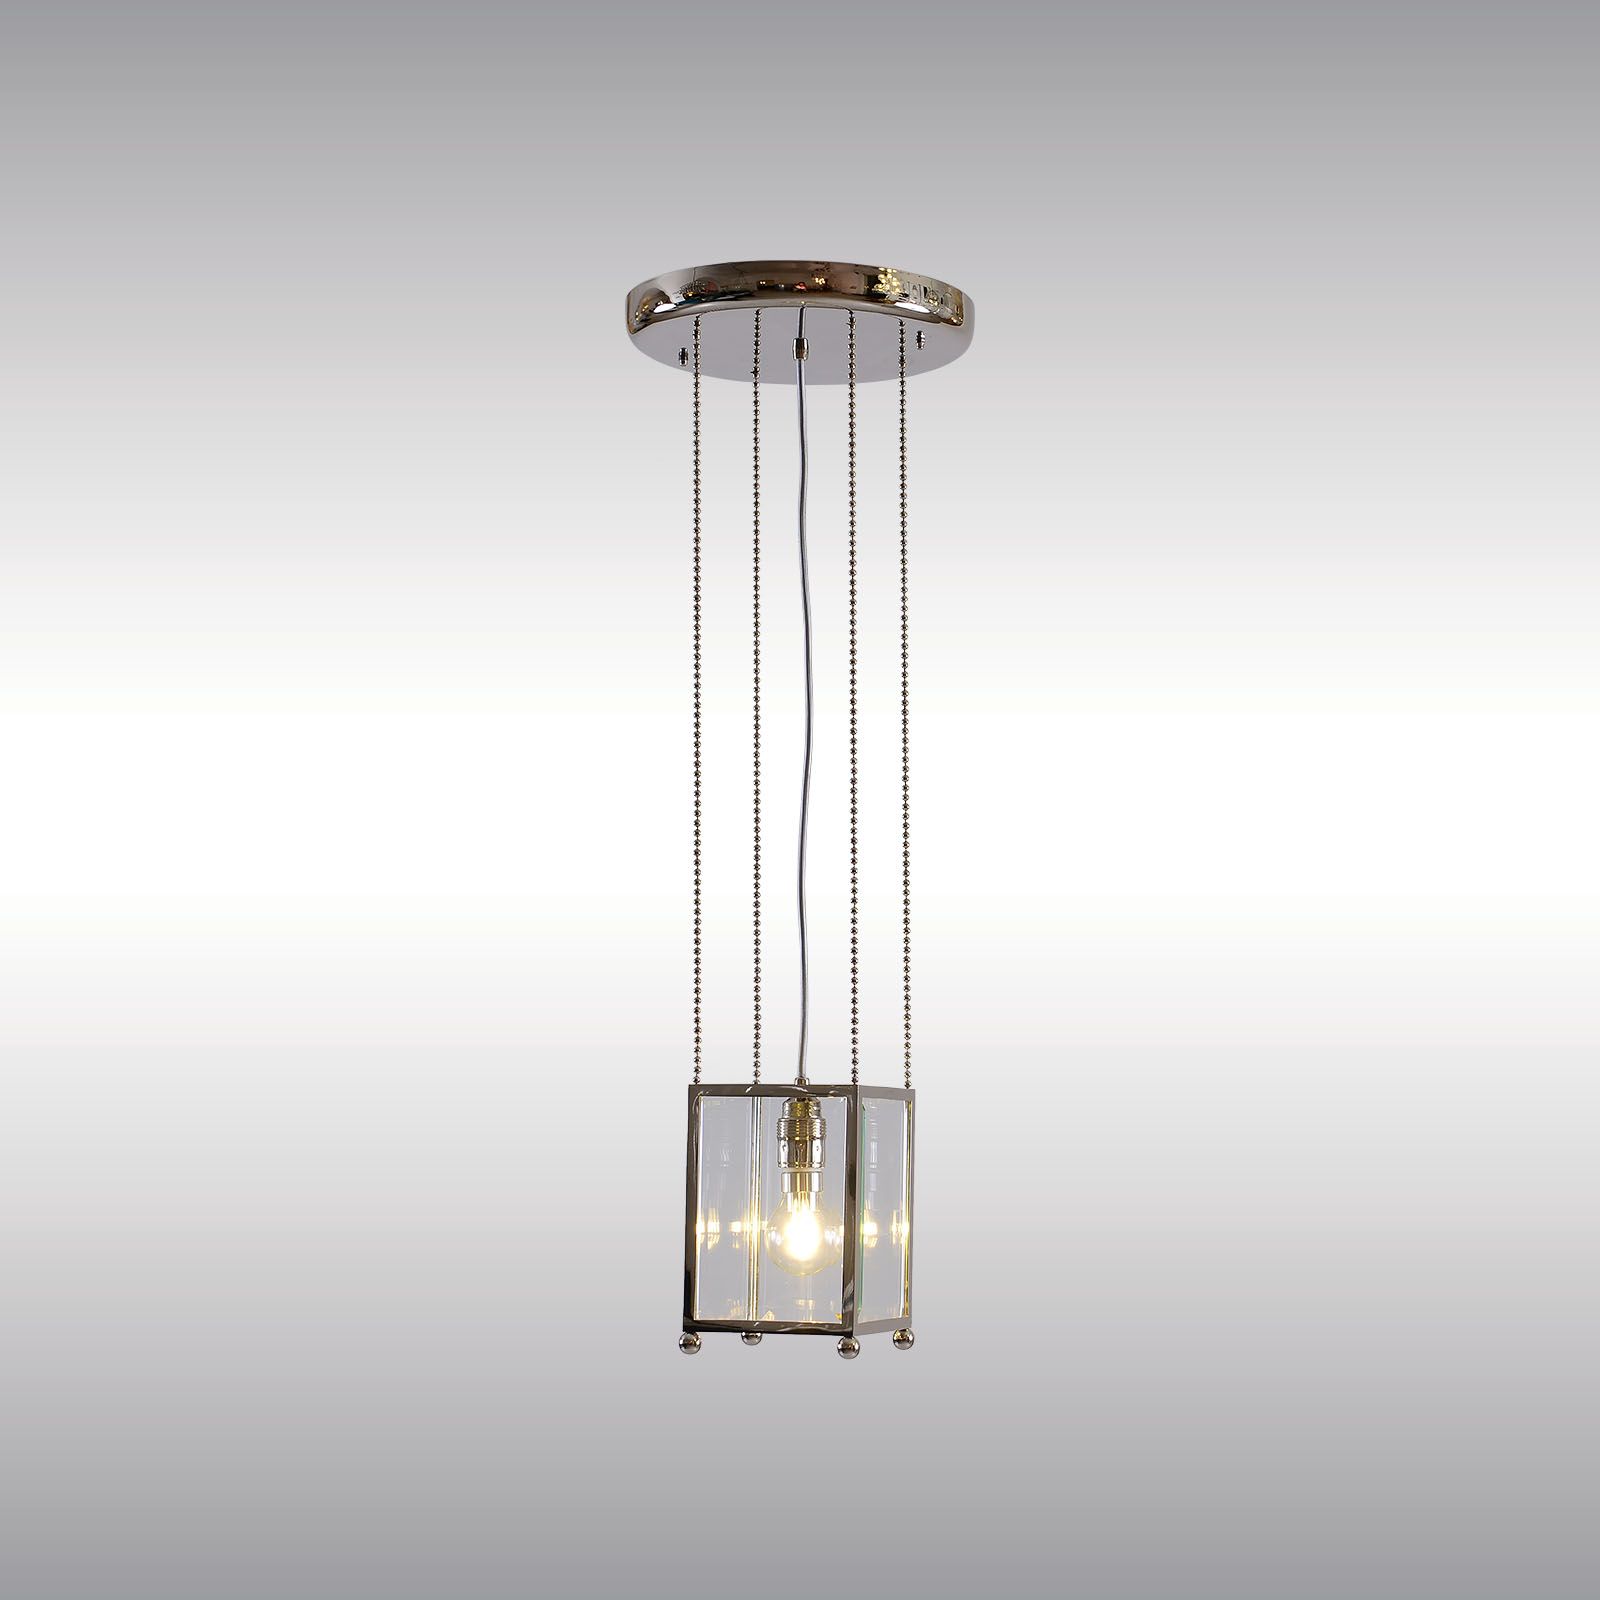 WOKA LAMPS VIENNA - OrderNr.: 20326|HH-Pende - Design: Josef Hoffmann